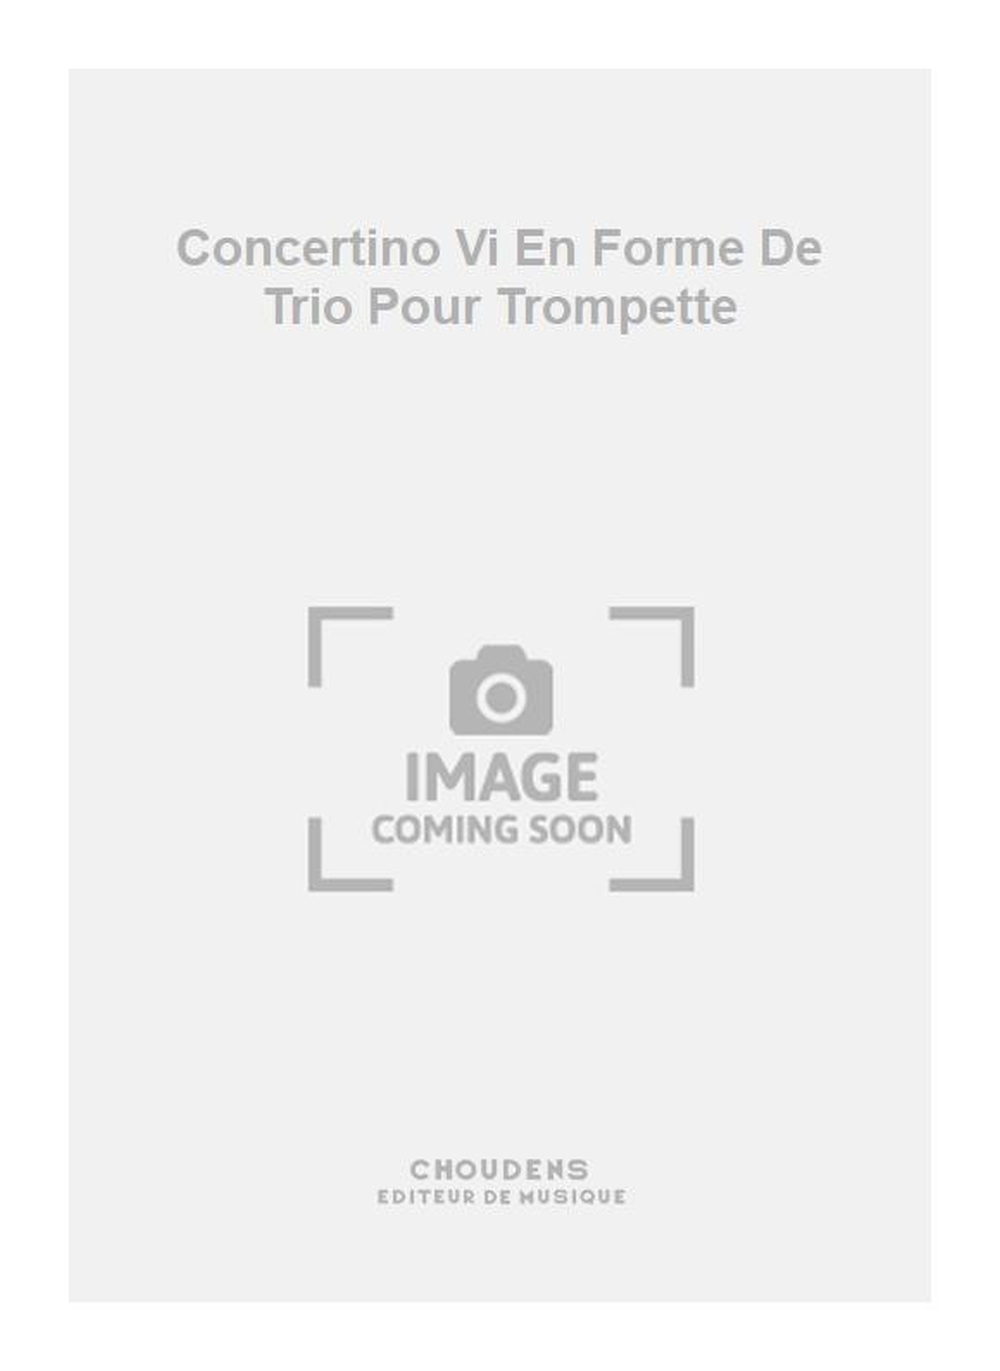 Pichaureau: Concertino Vi En Forme De Trio Pour Trompette